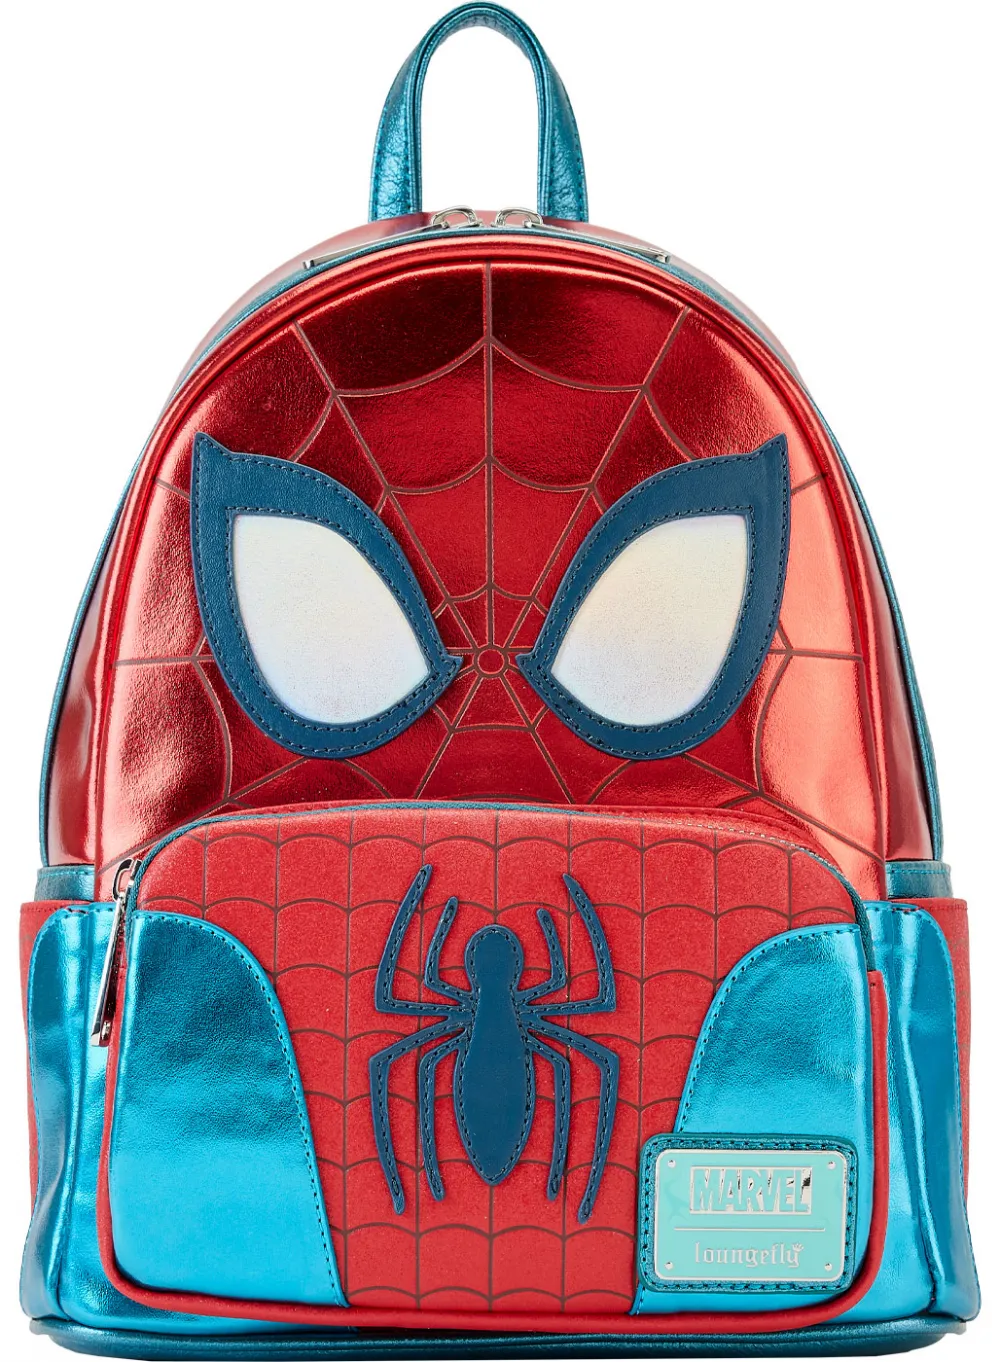 Spider-Man Cosplay Metallic Mini Backpack Loungefly